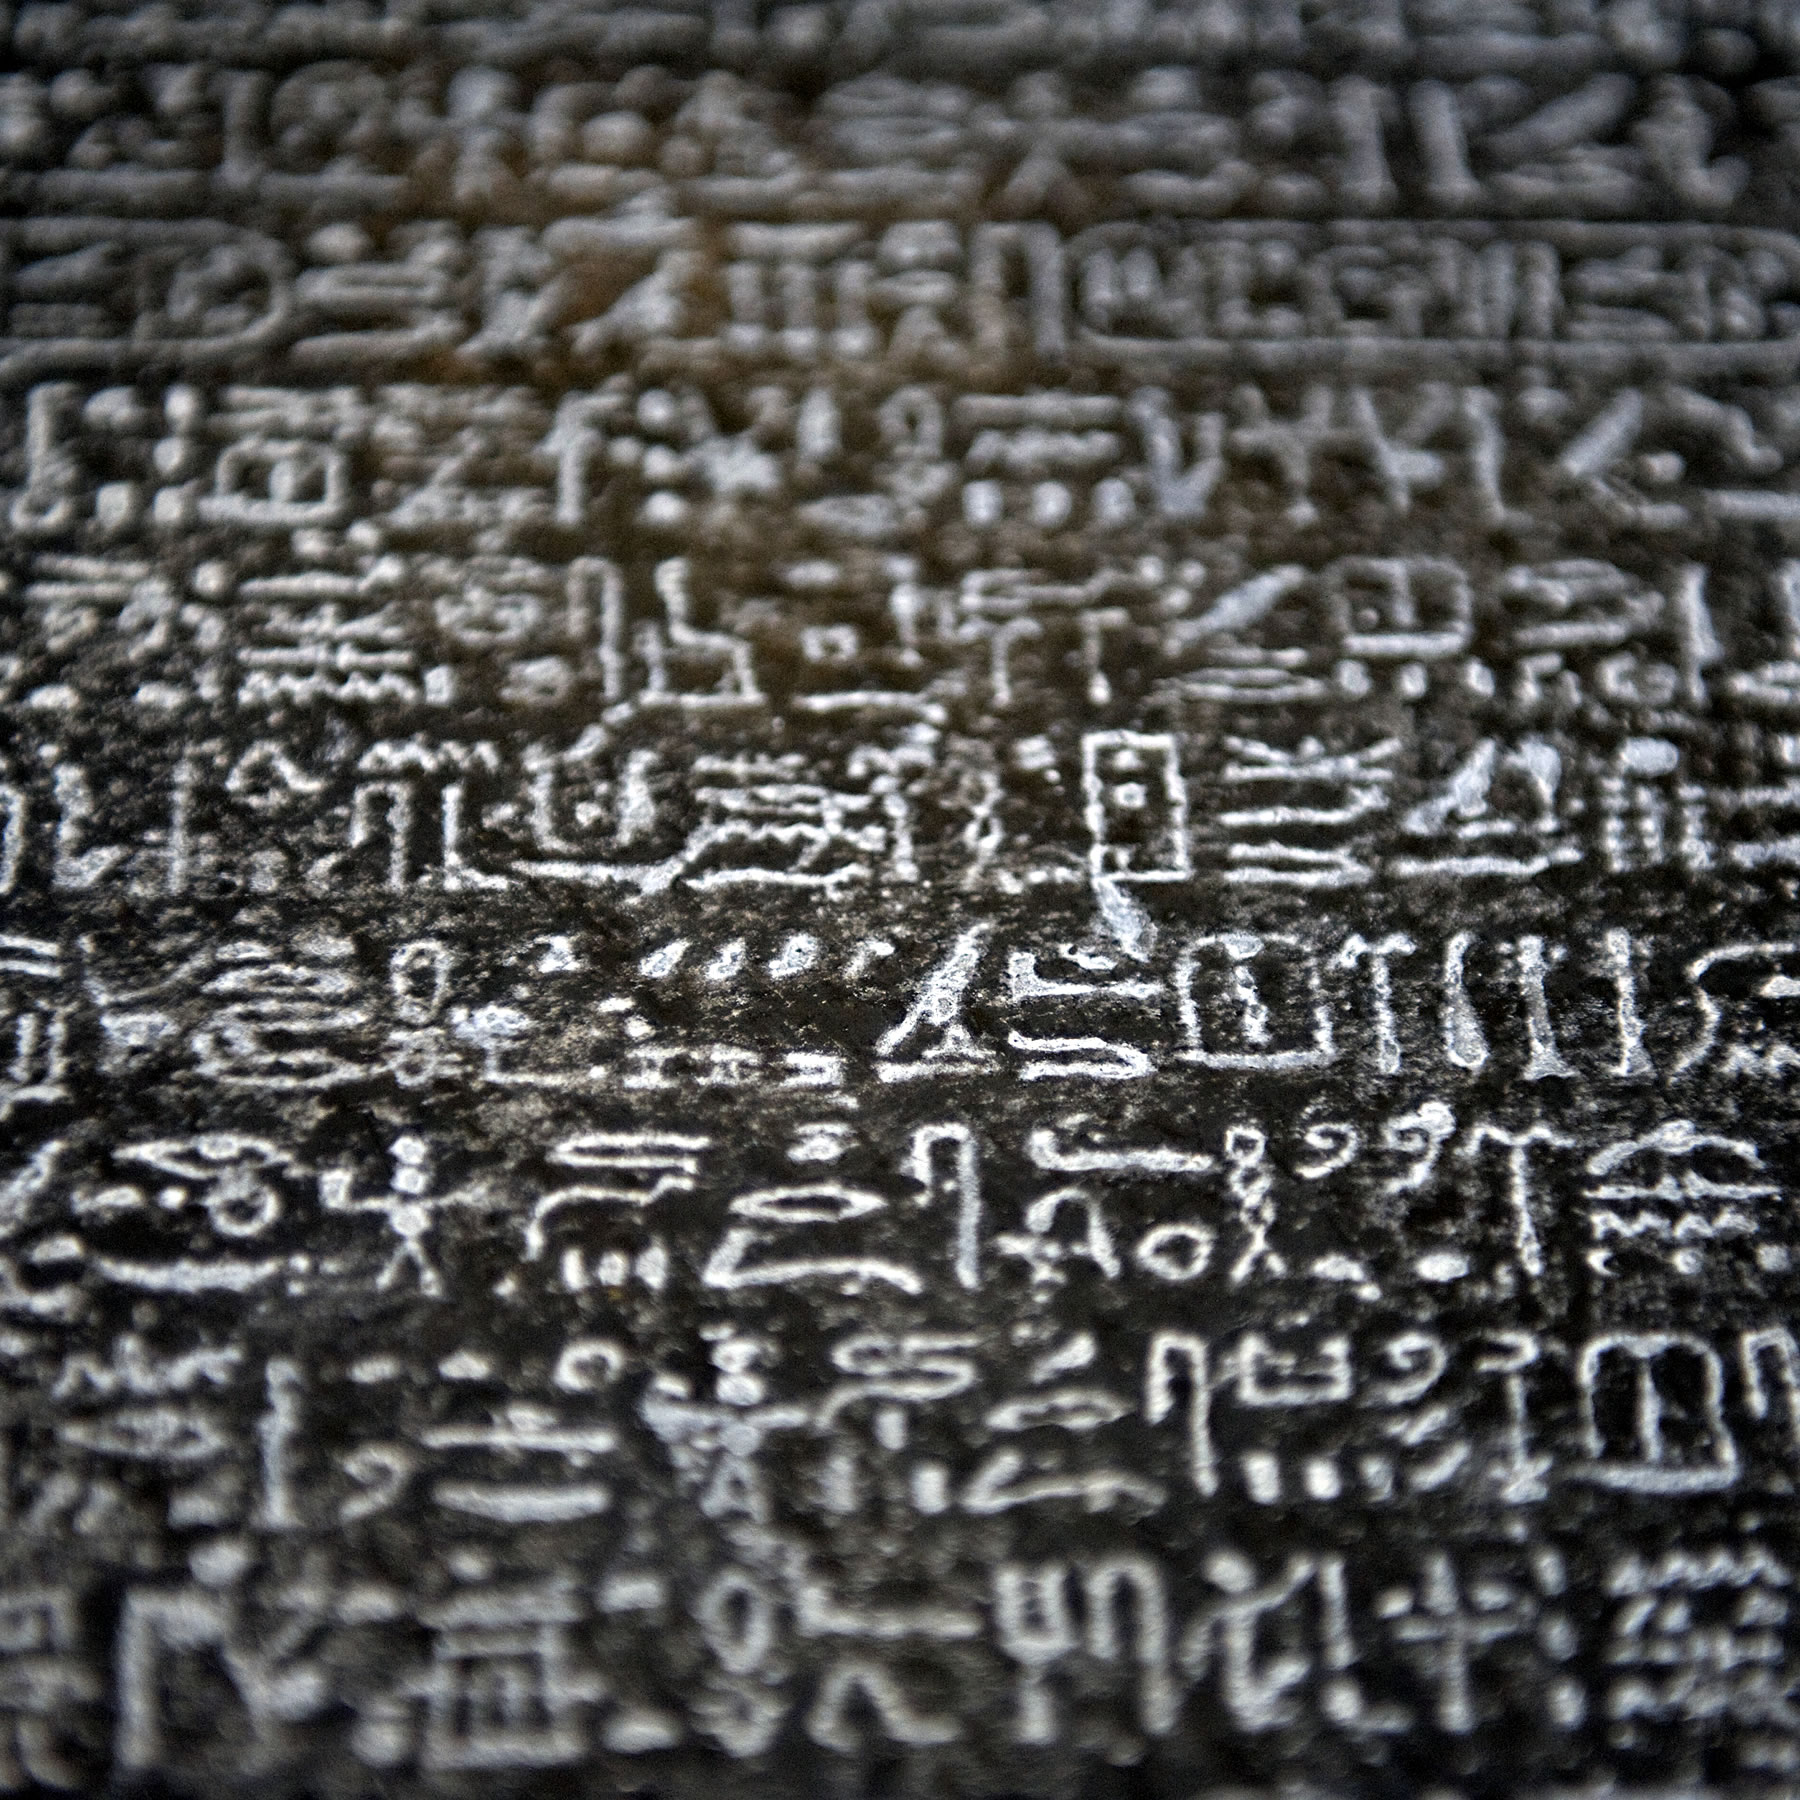 Macro photograph of Rosetta Stone